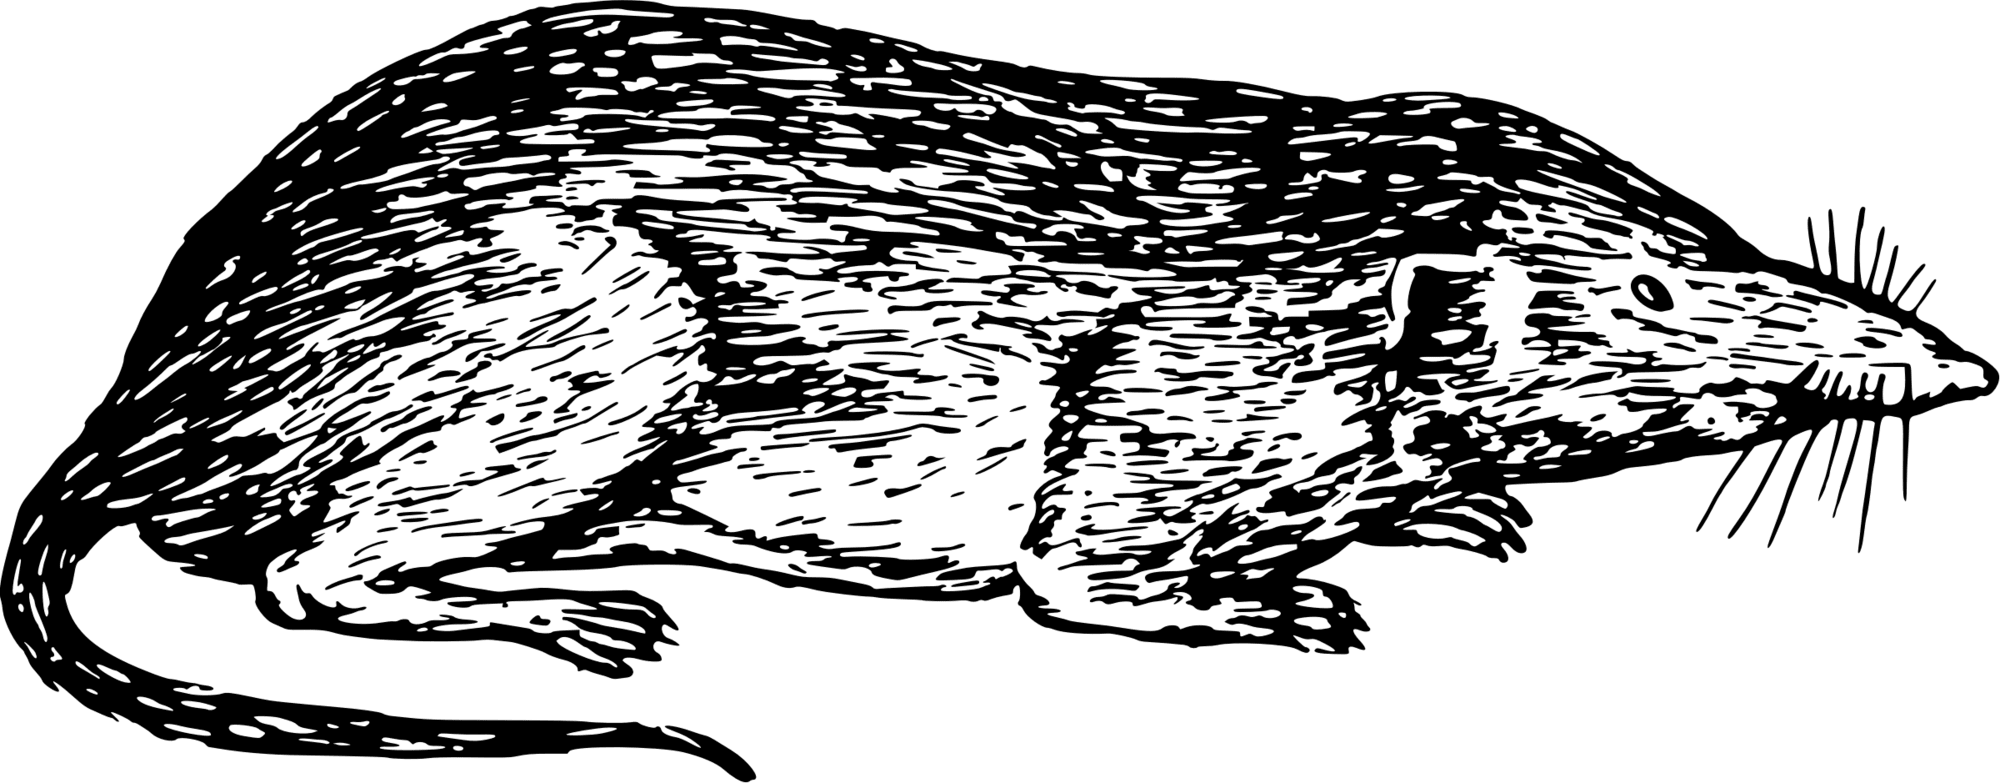 Rat shrew mouse vector clipart image photo